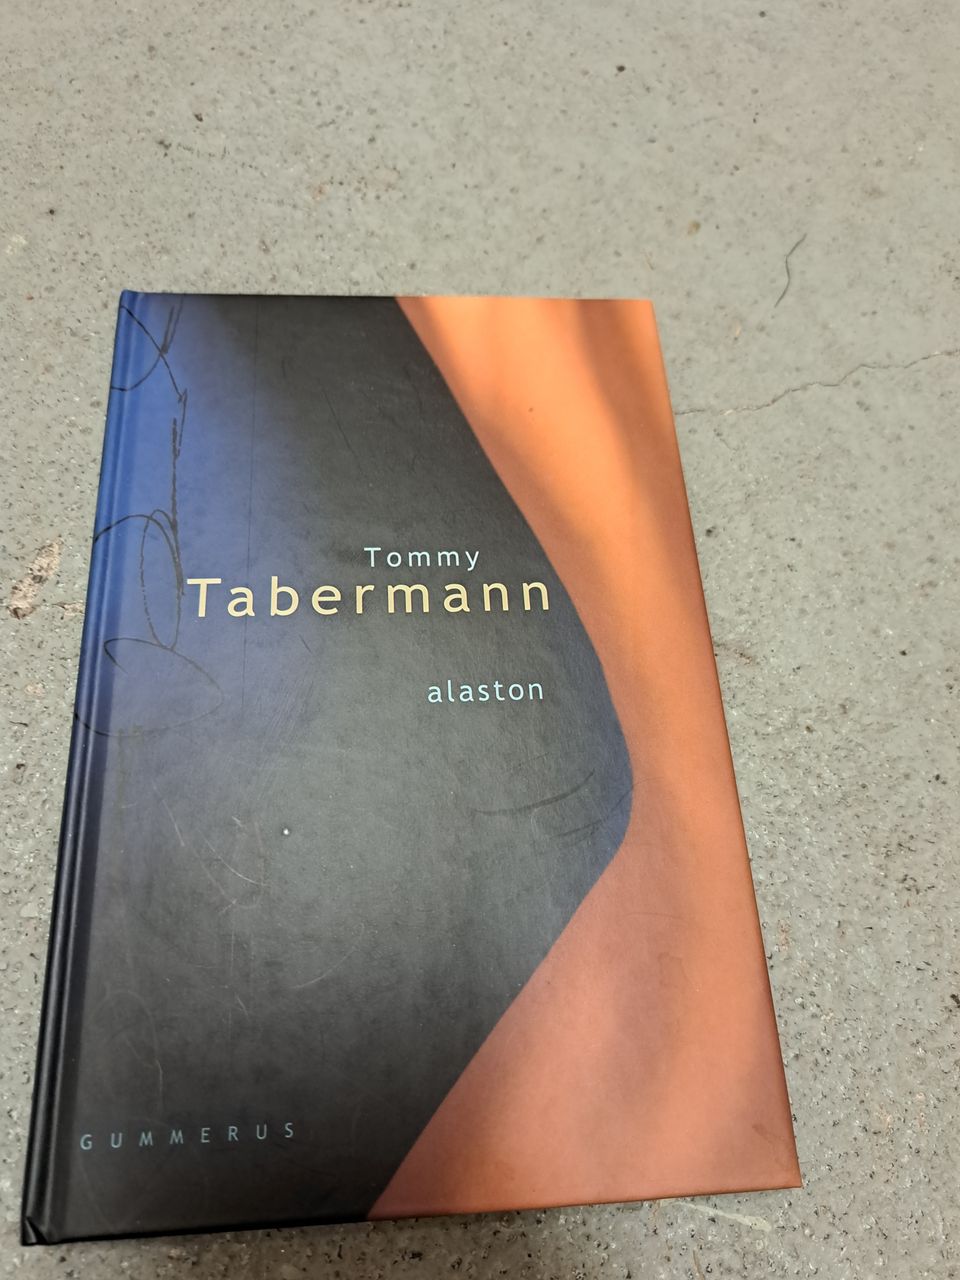 Tommy Taberman alaston